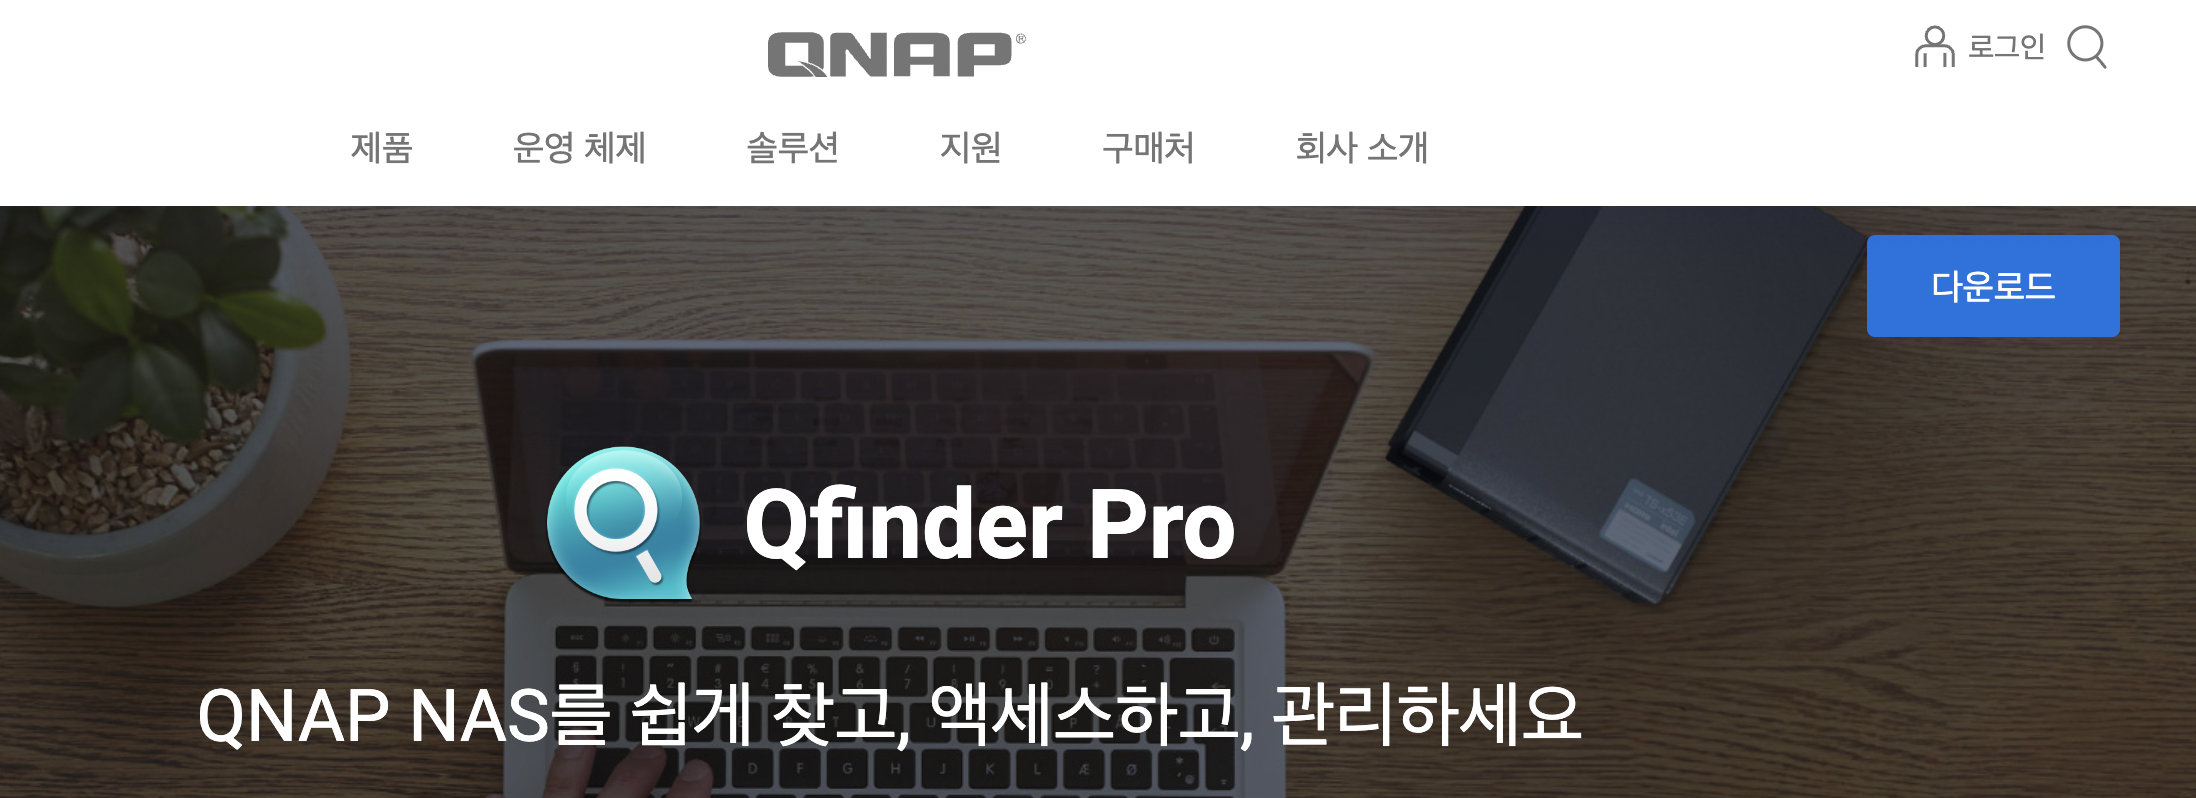 Qfinder Pro